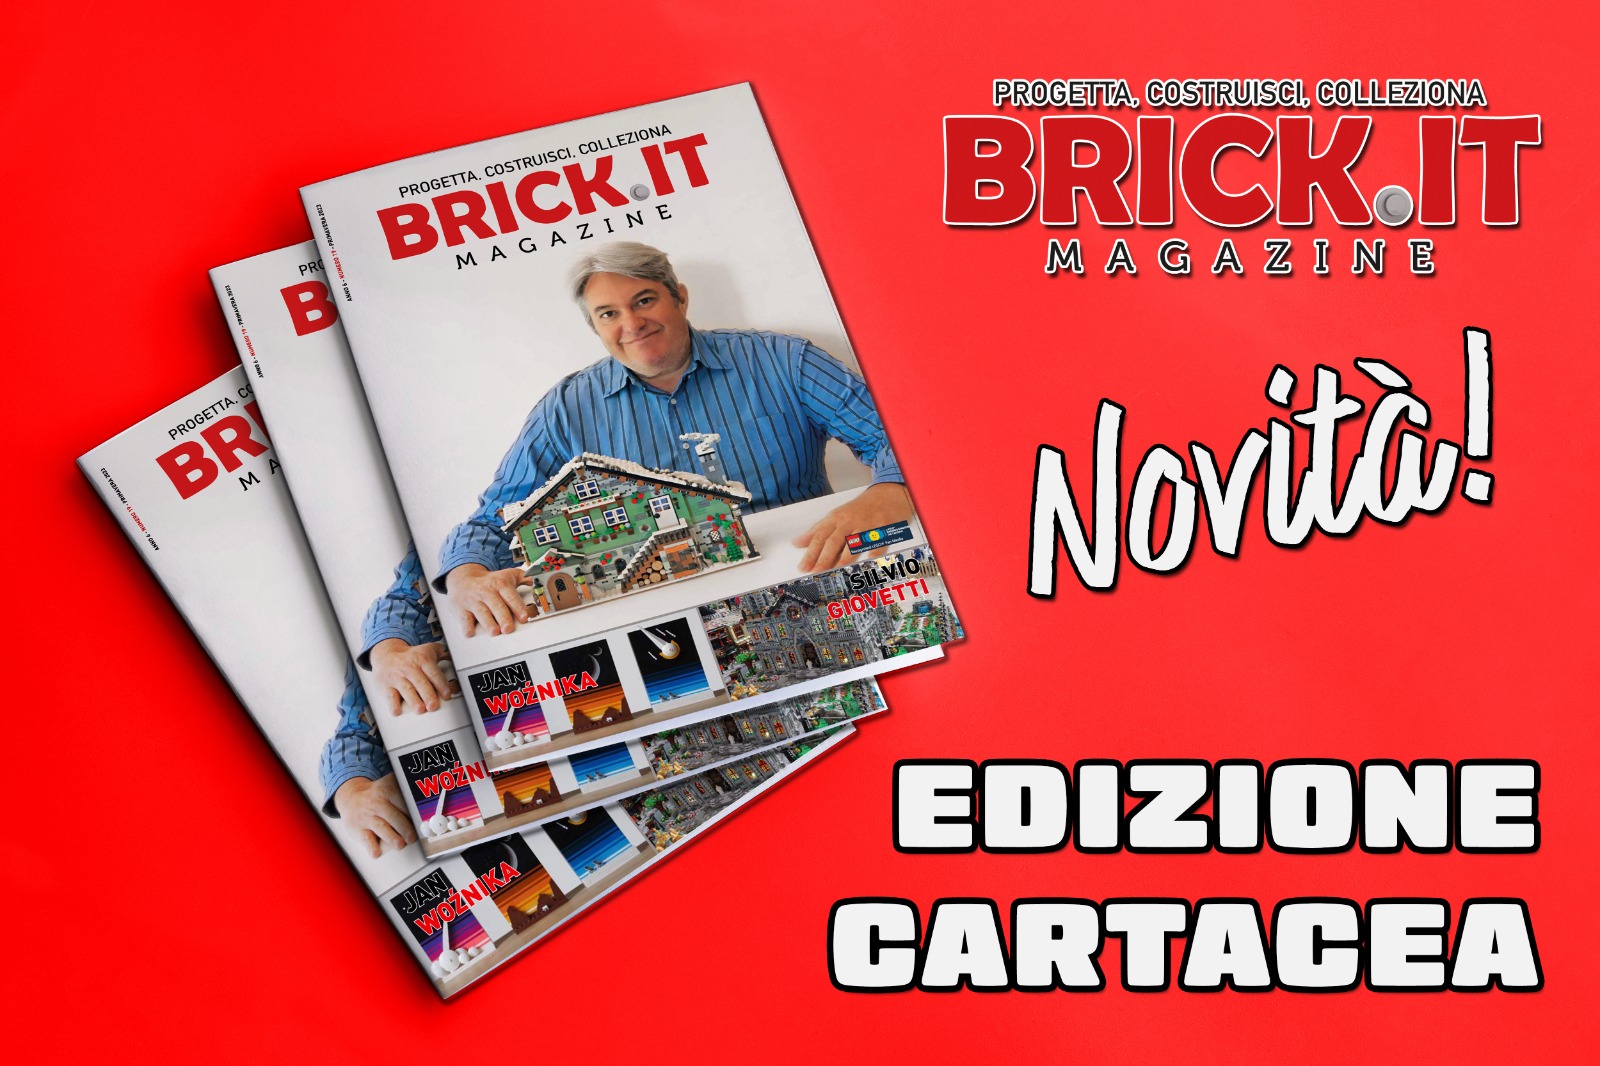 Arriva Brick.it Magazine in edizione cartacea!